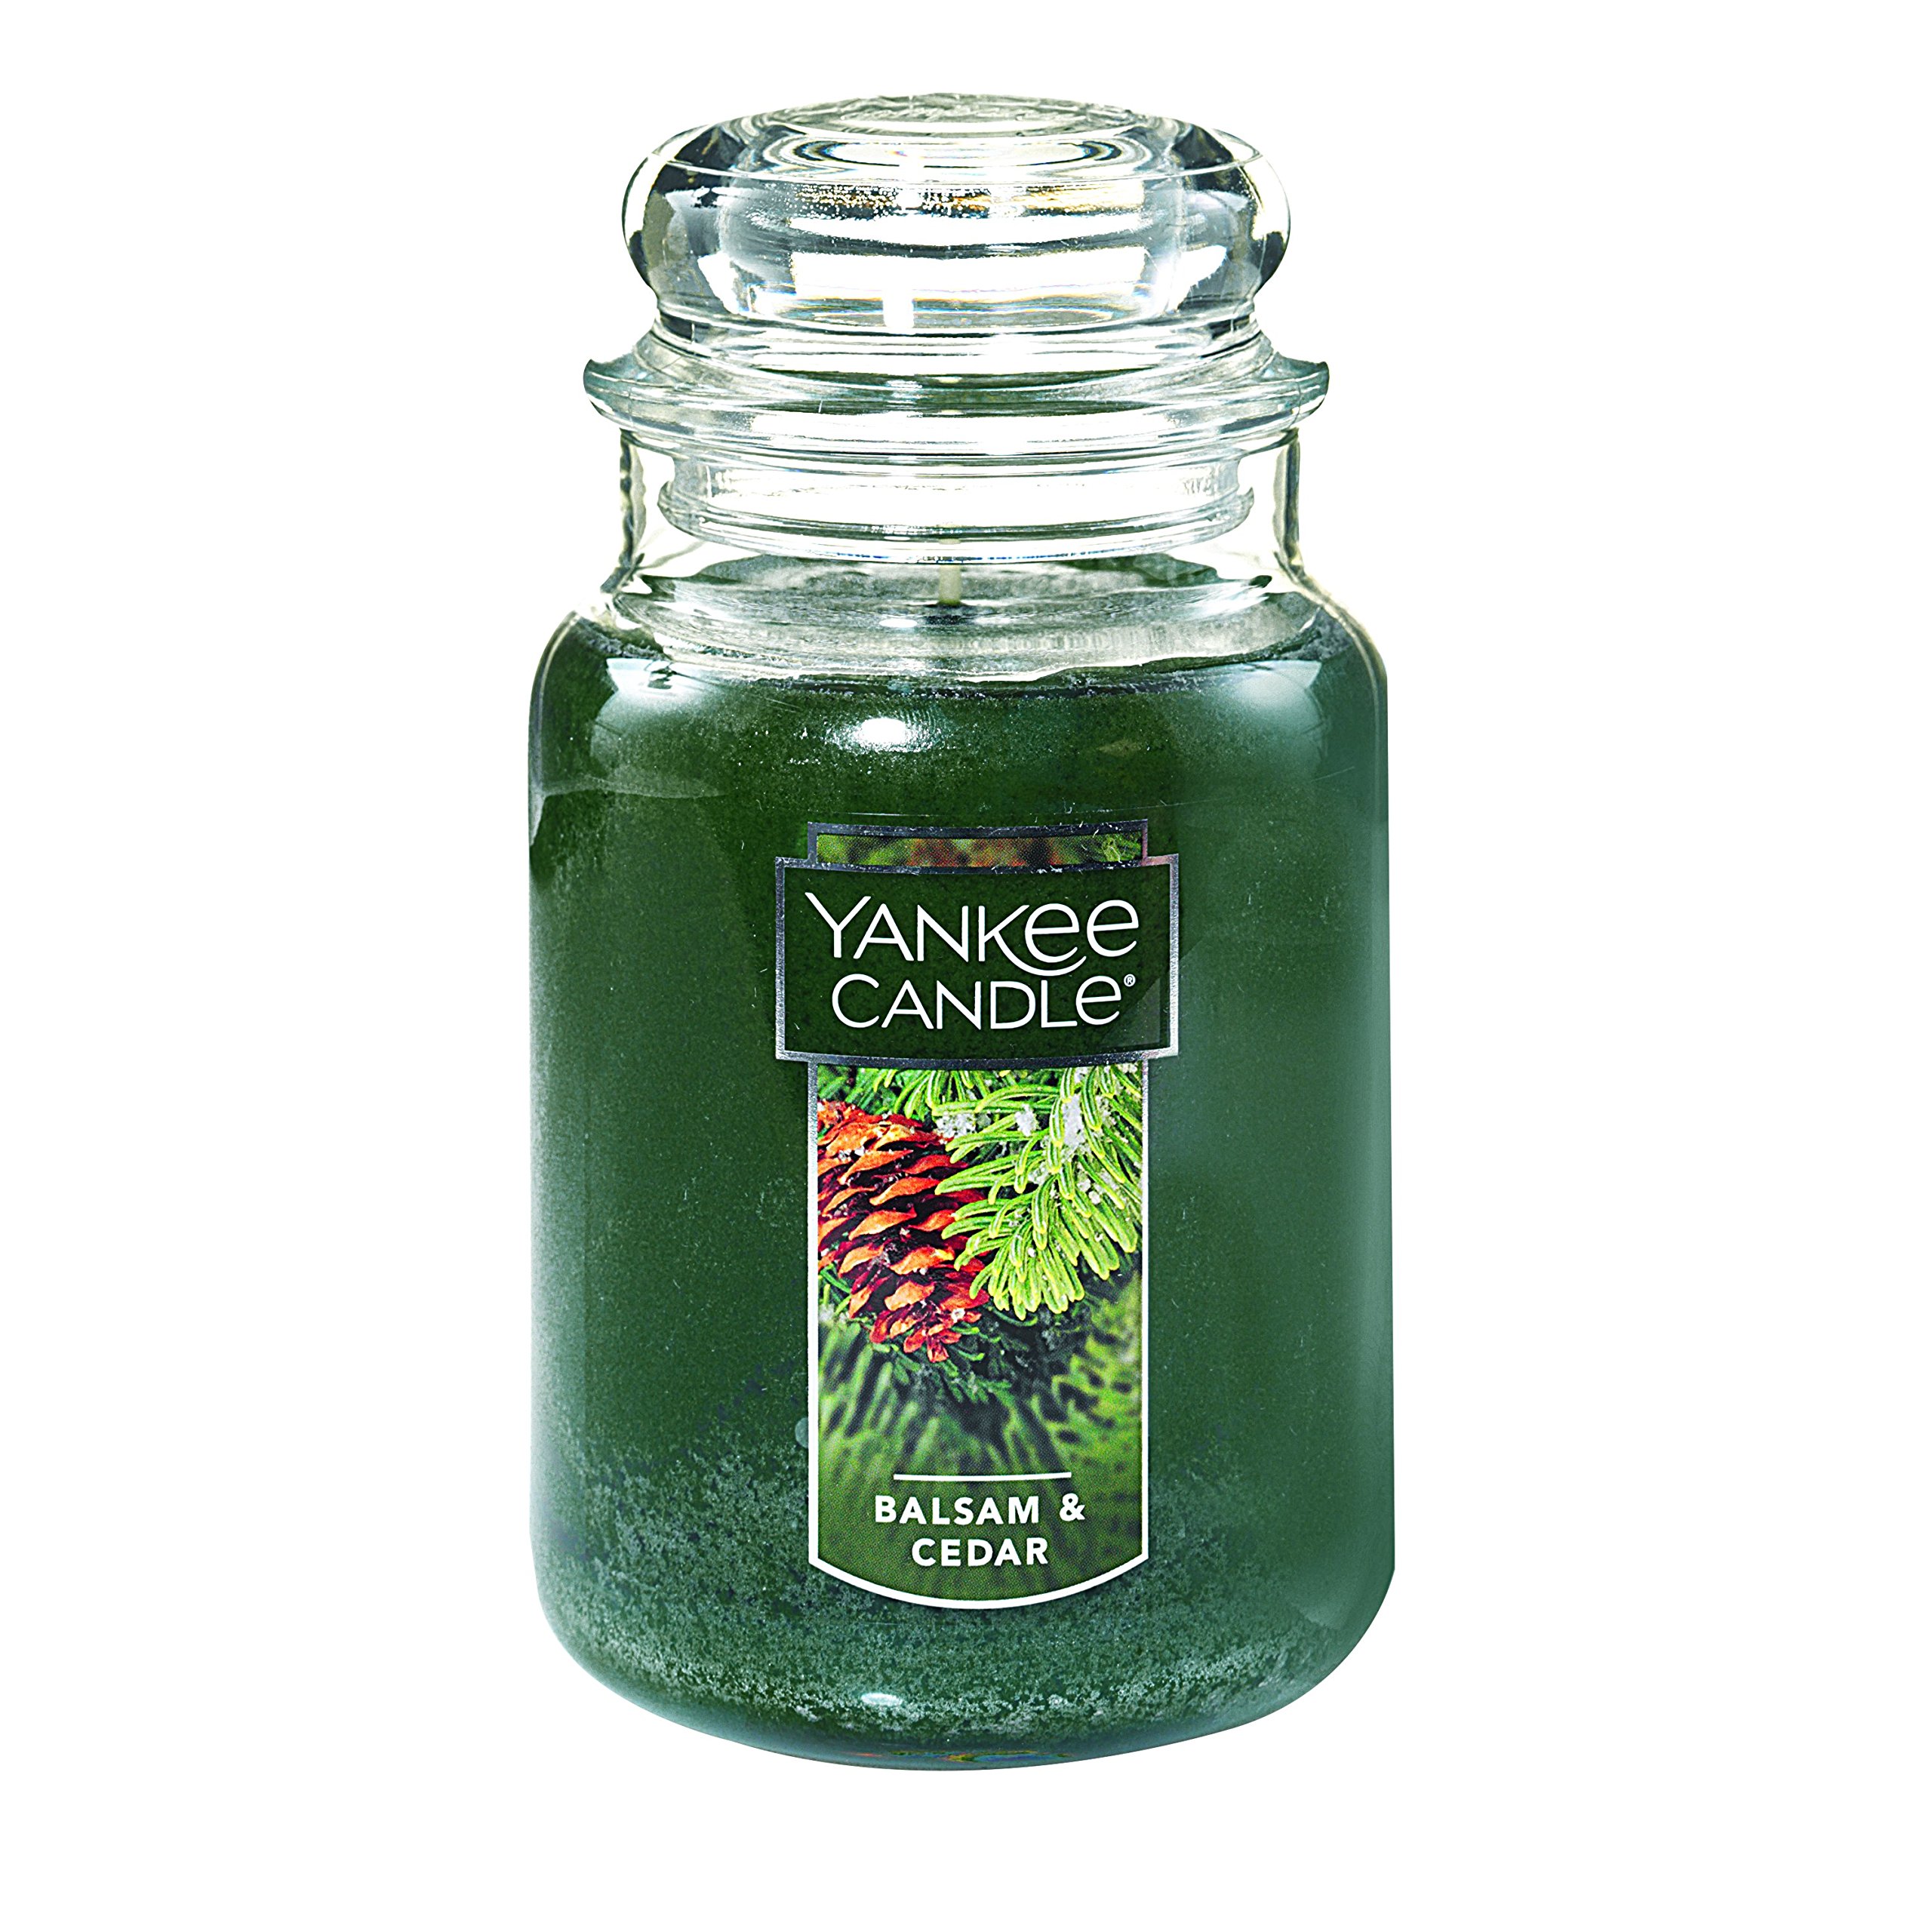 22-Oz Yankee Candle Large Jar (Balsam & Cedar) $12.39 + Free Shipping w/ Prime or on $25+